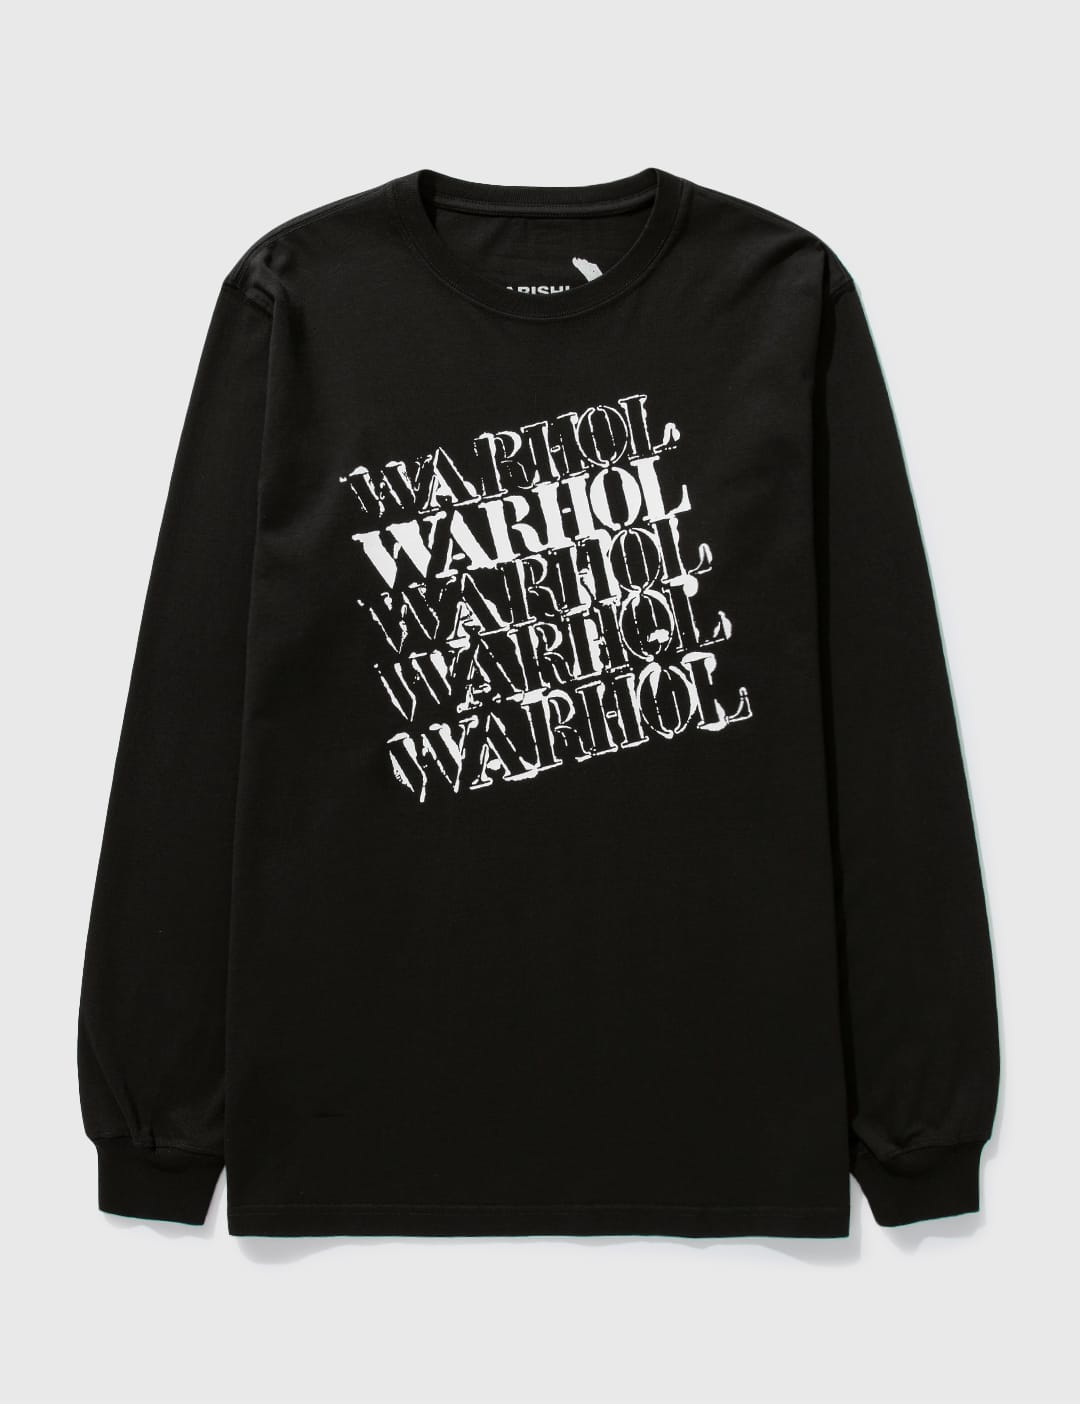 Maharishi Andy Warhol Airborne T-shirt